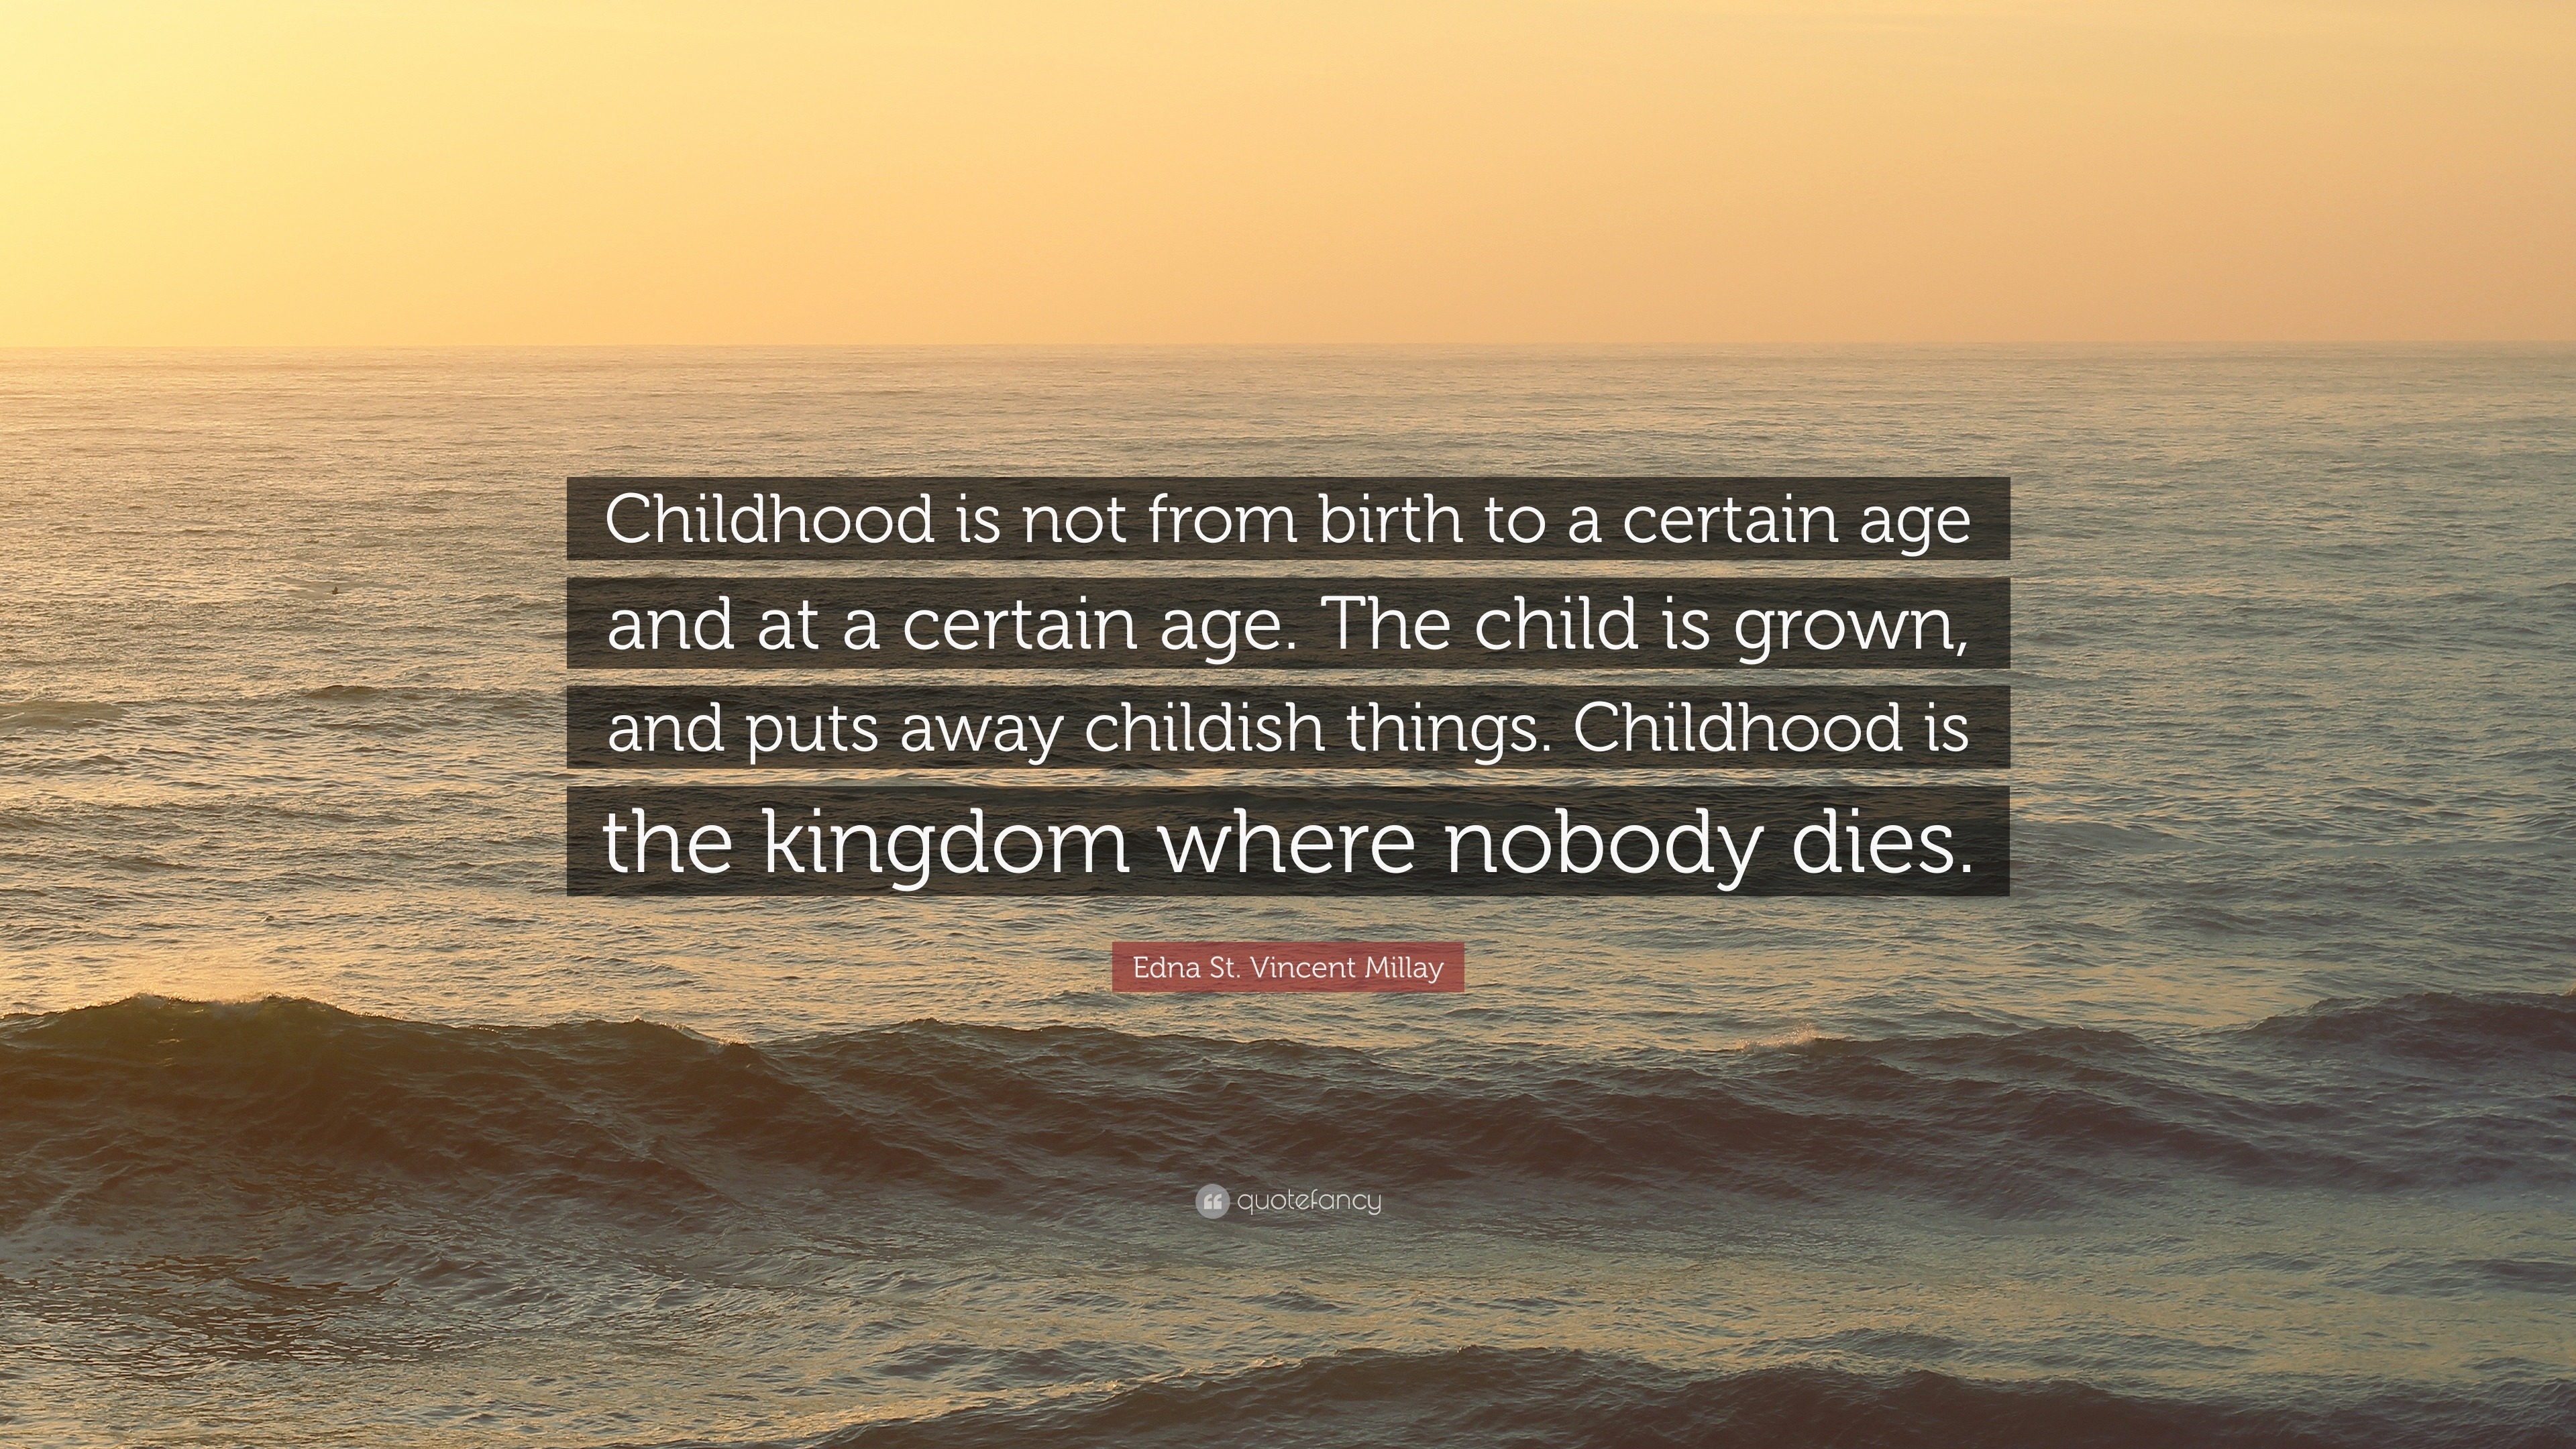 Childhood is the kingdom where nobody dies essay